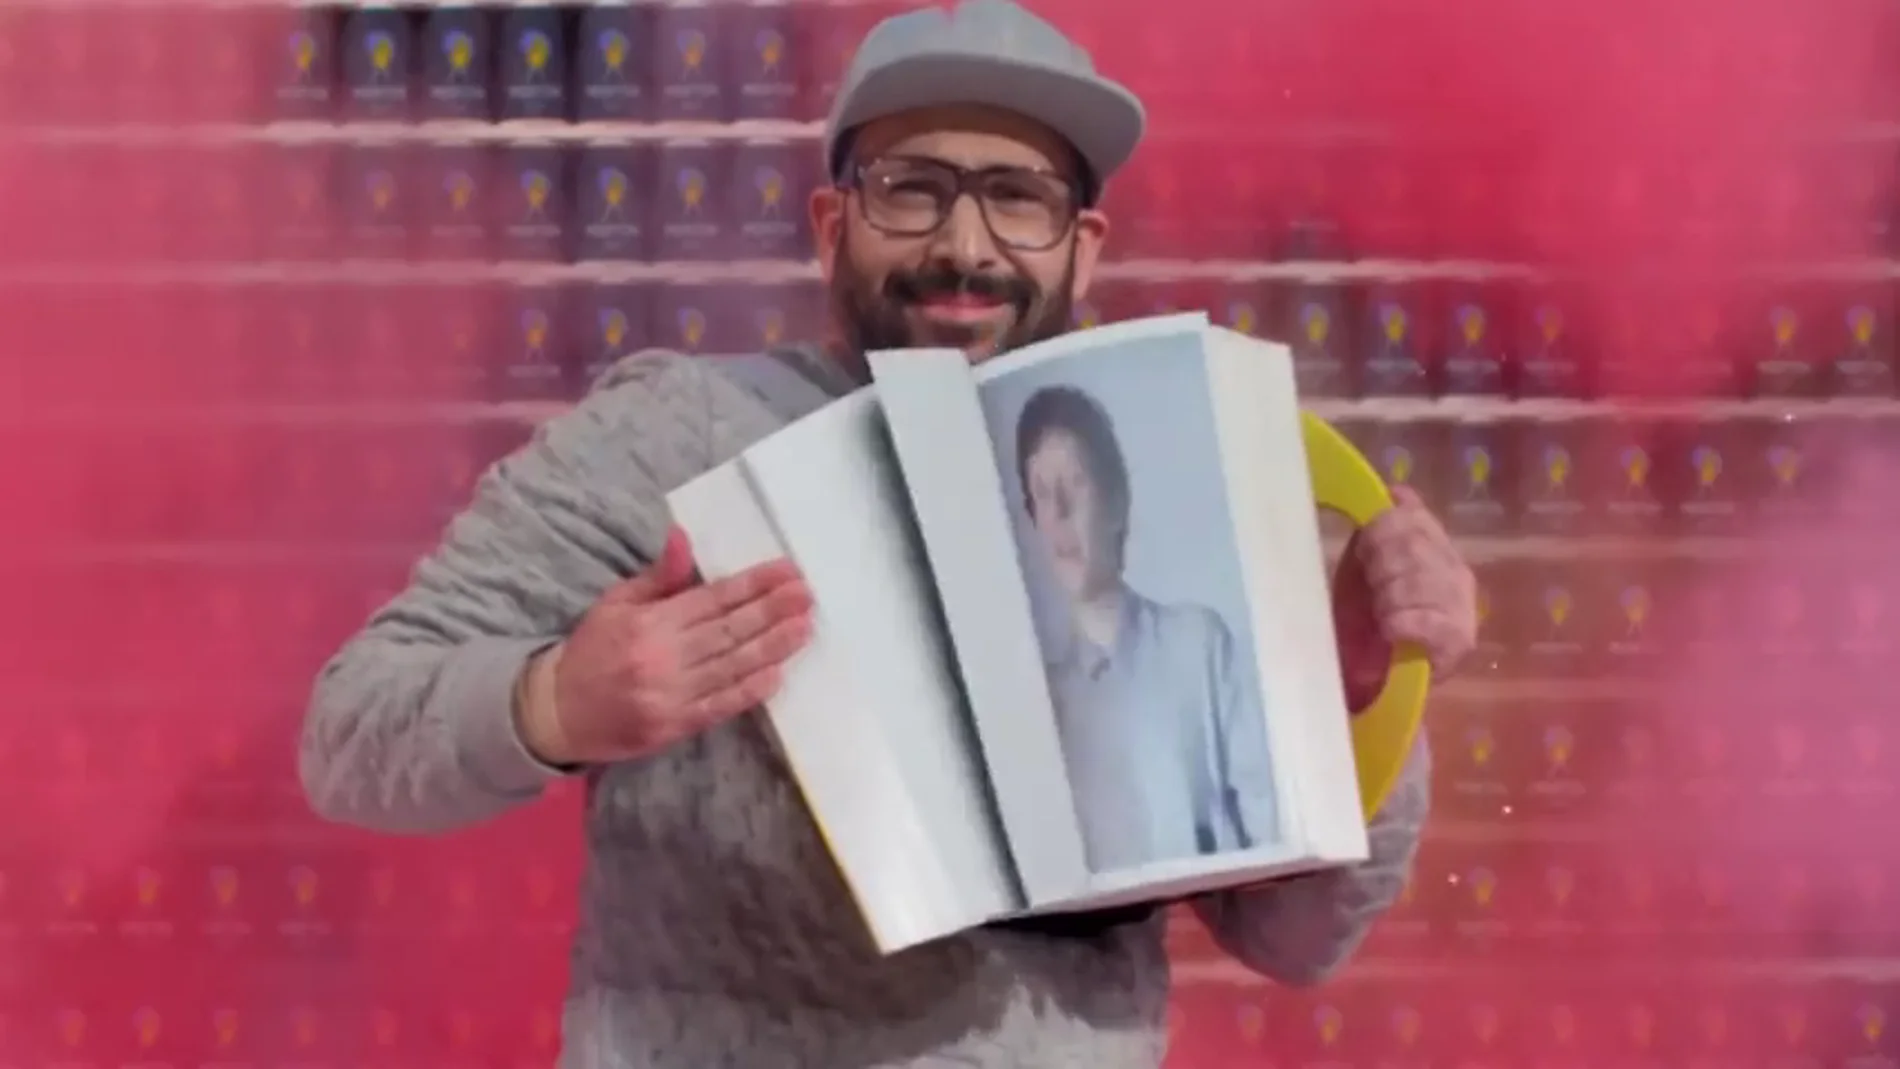 Frame 56.050131 de: OK Go vuelve a asombrar con un vídeo que te dejará boquiabierto